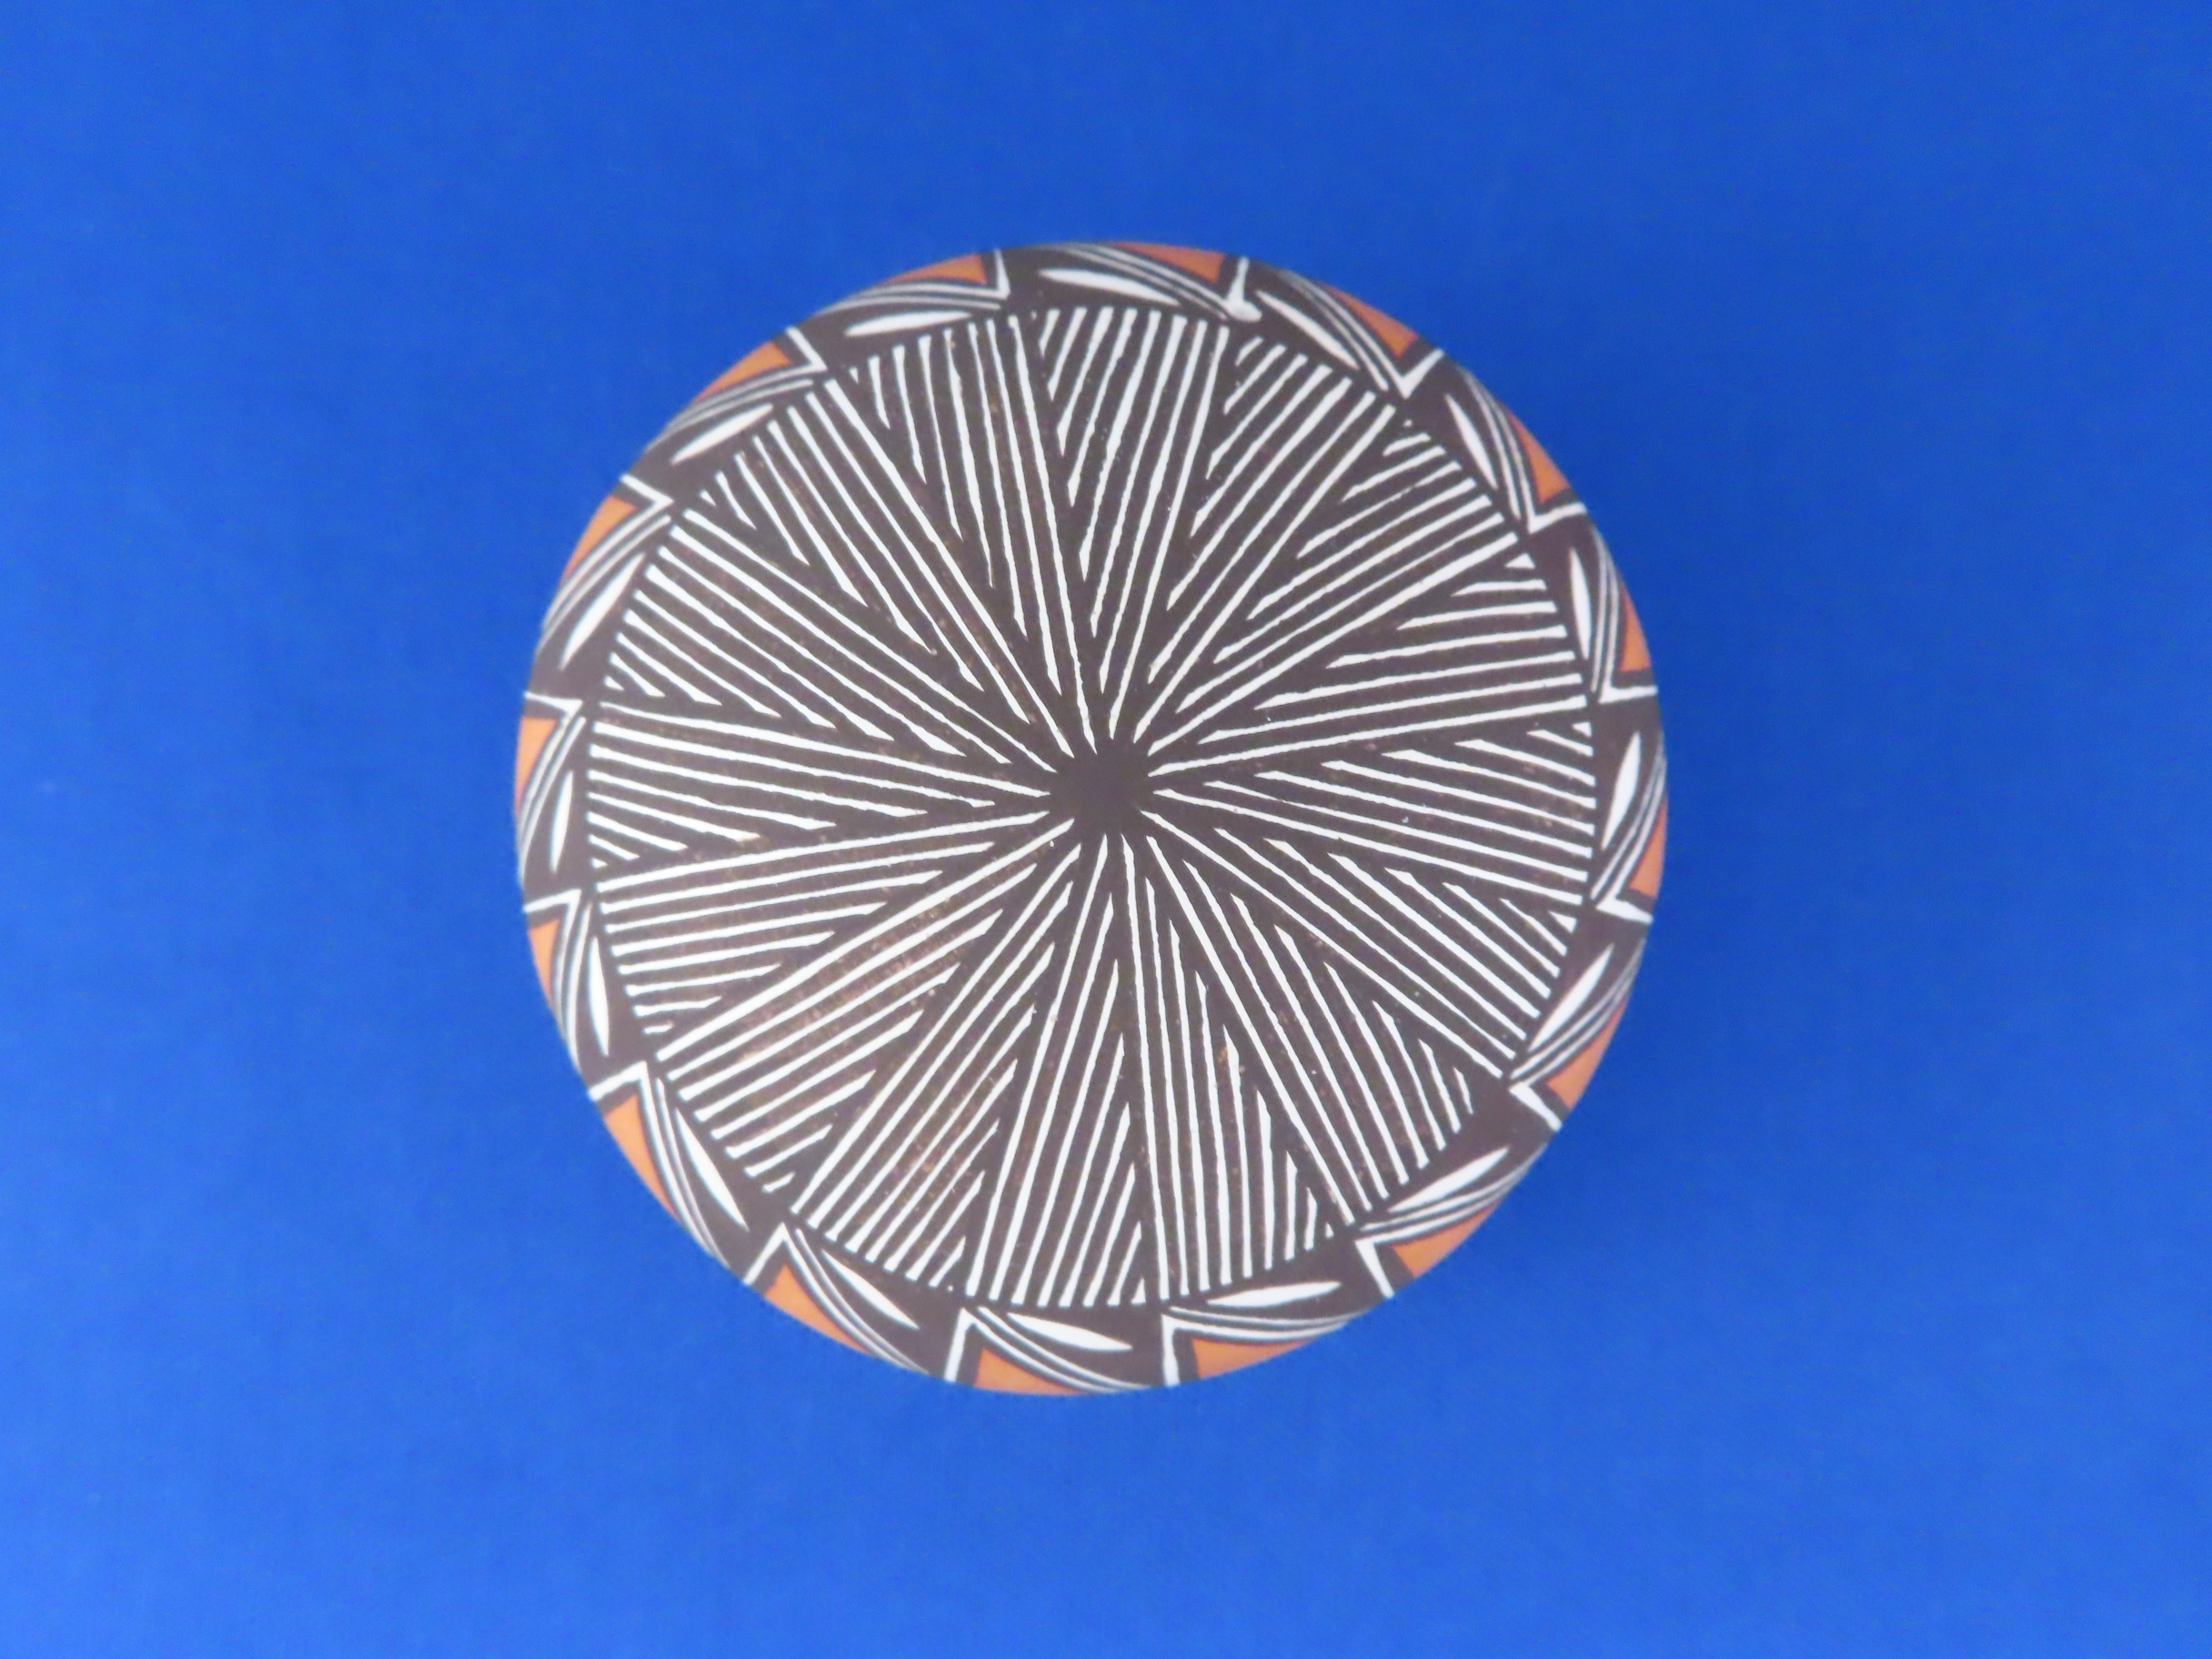 Acoma Seed Pot Pottery by Amanda Lucario